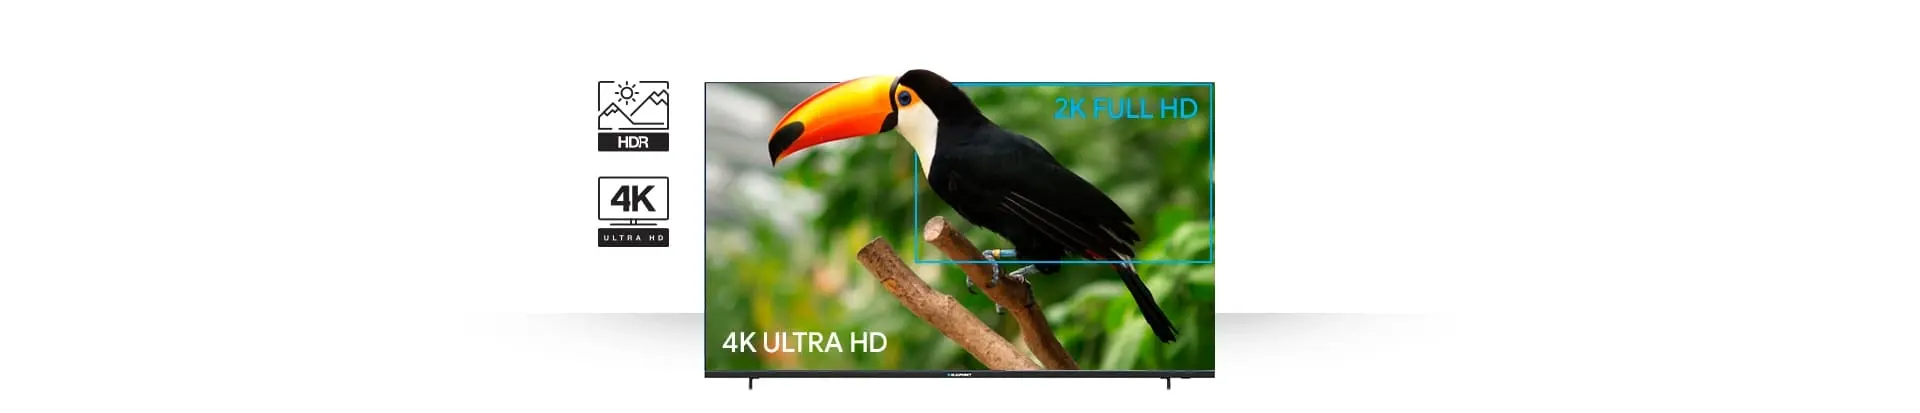 TV UHD 4K Smart TV LED Blaupunkt 55UB5000